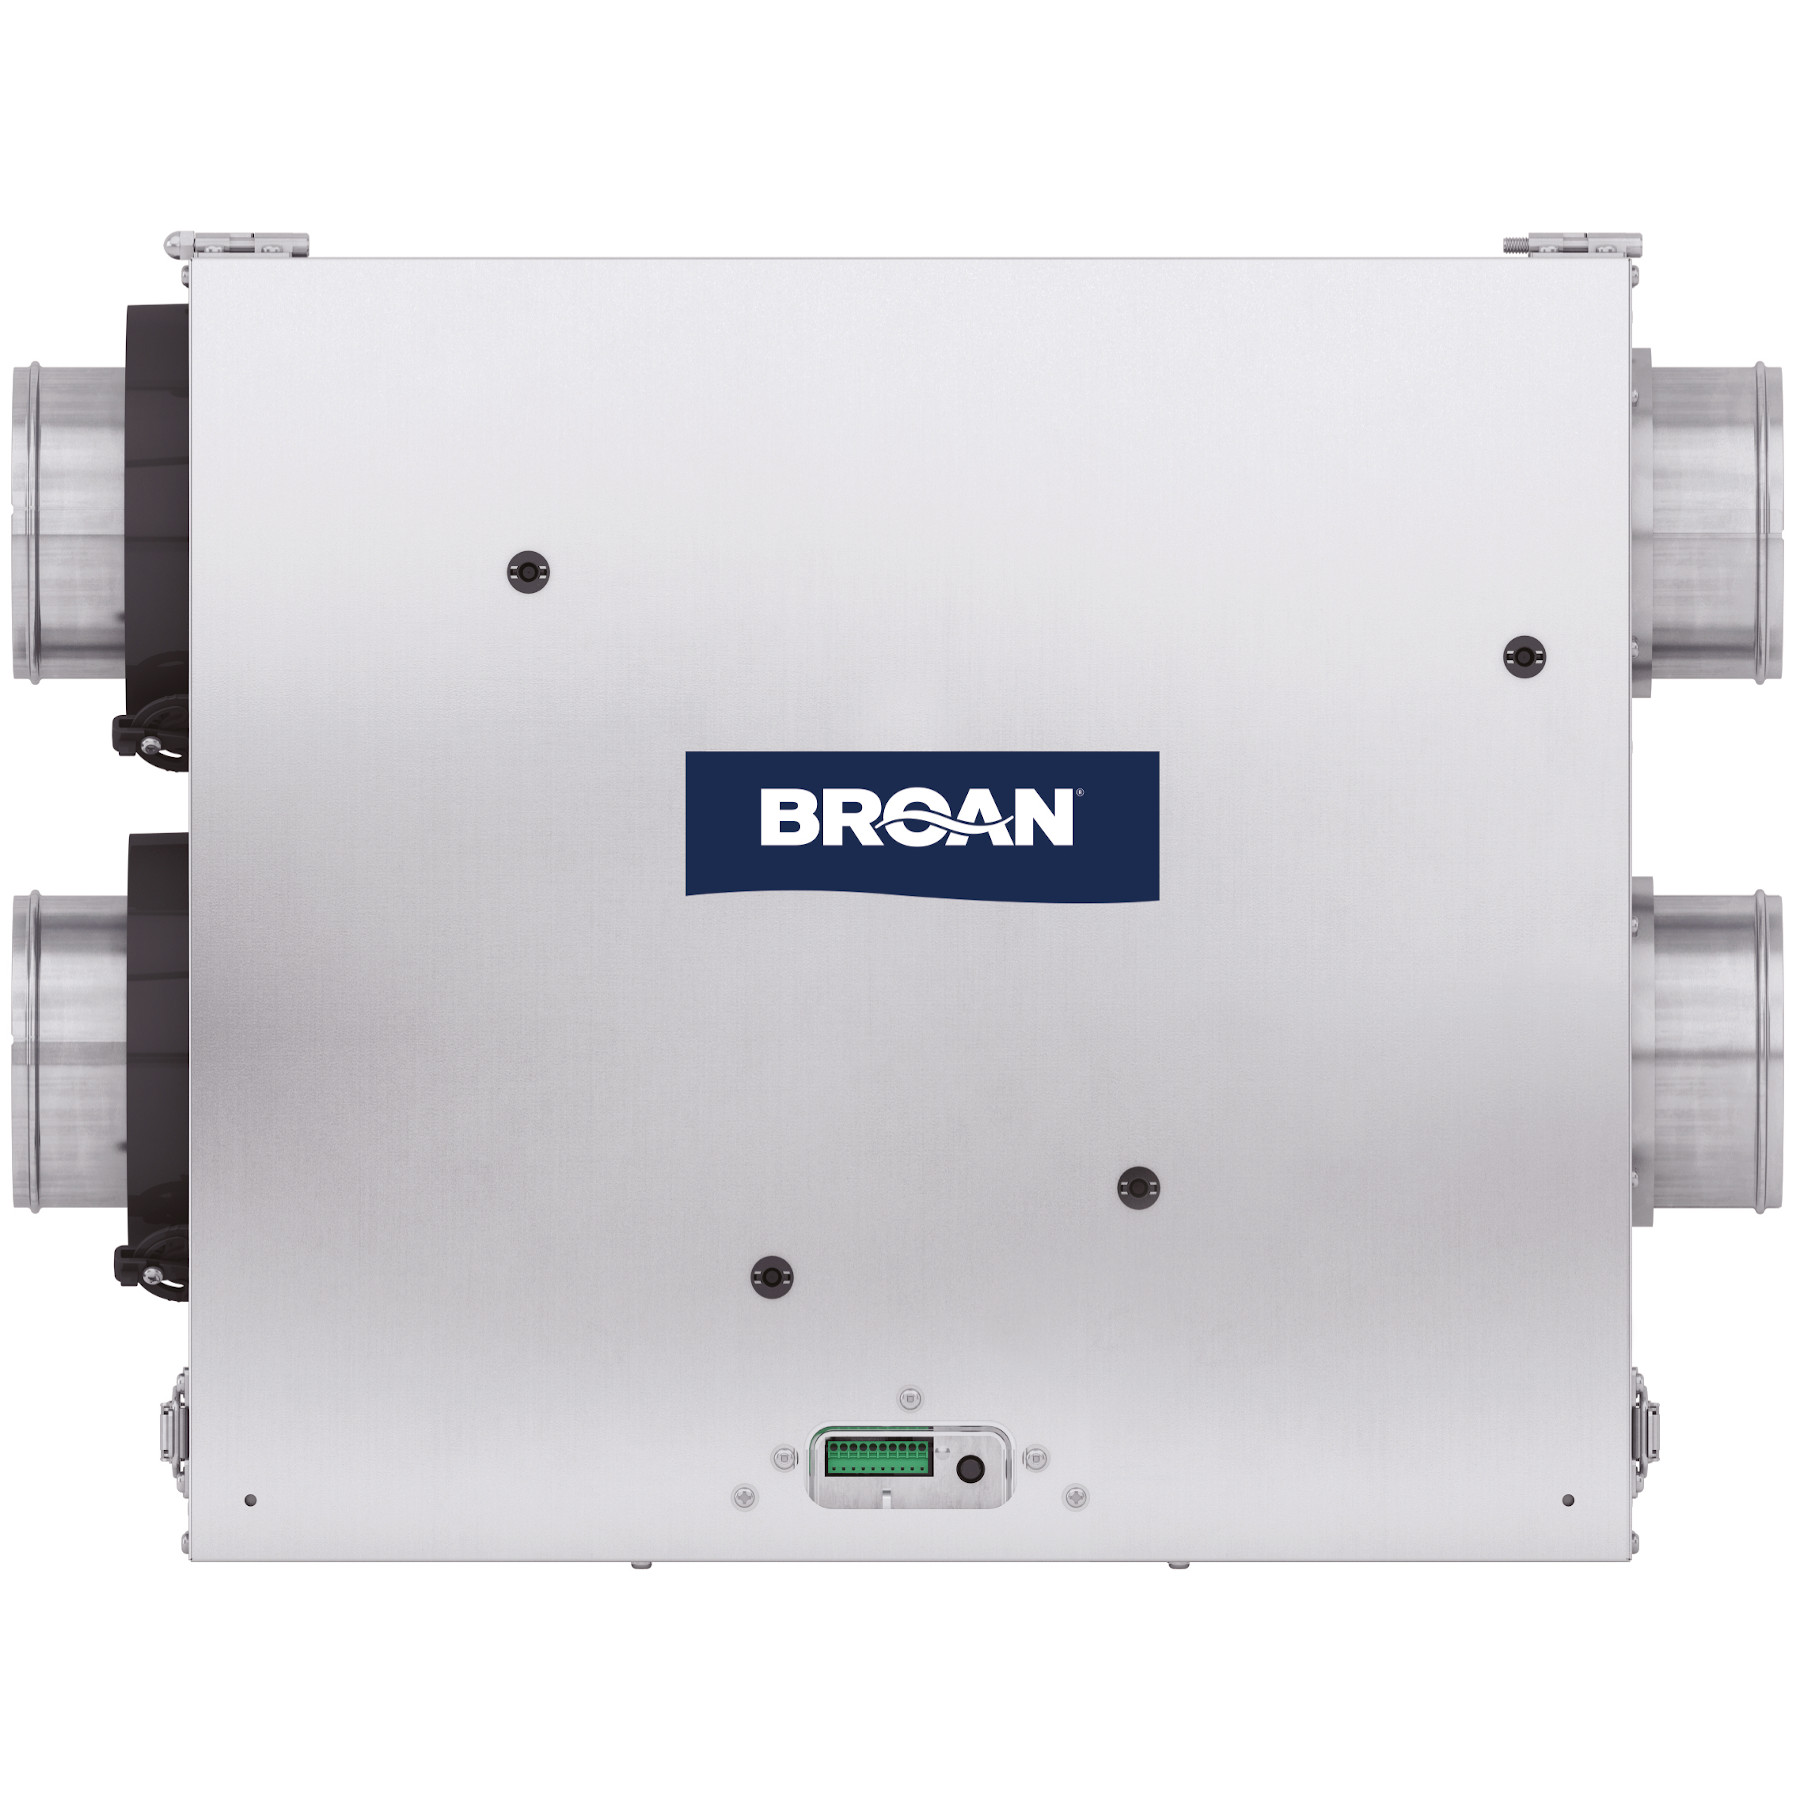 Broan® SKY Series Energy Recovery Ventilator, 102 CFM at 0.4 in. w.g.